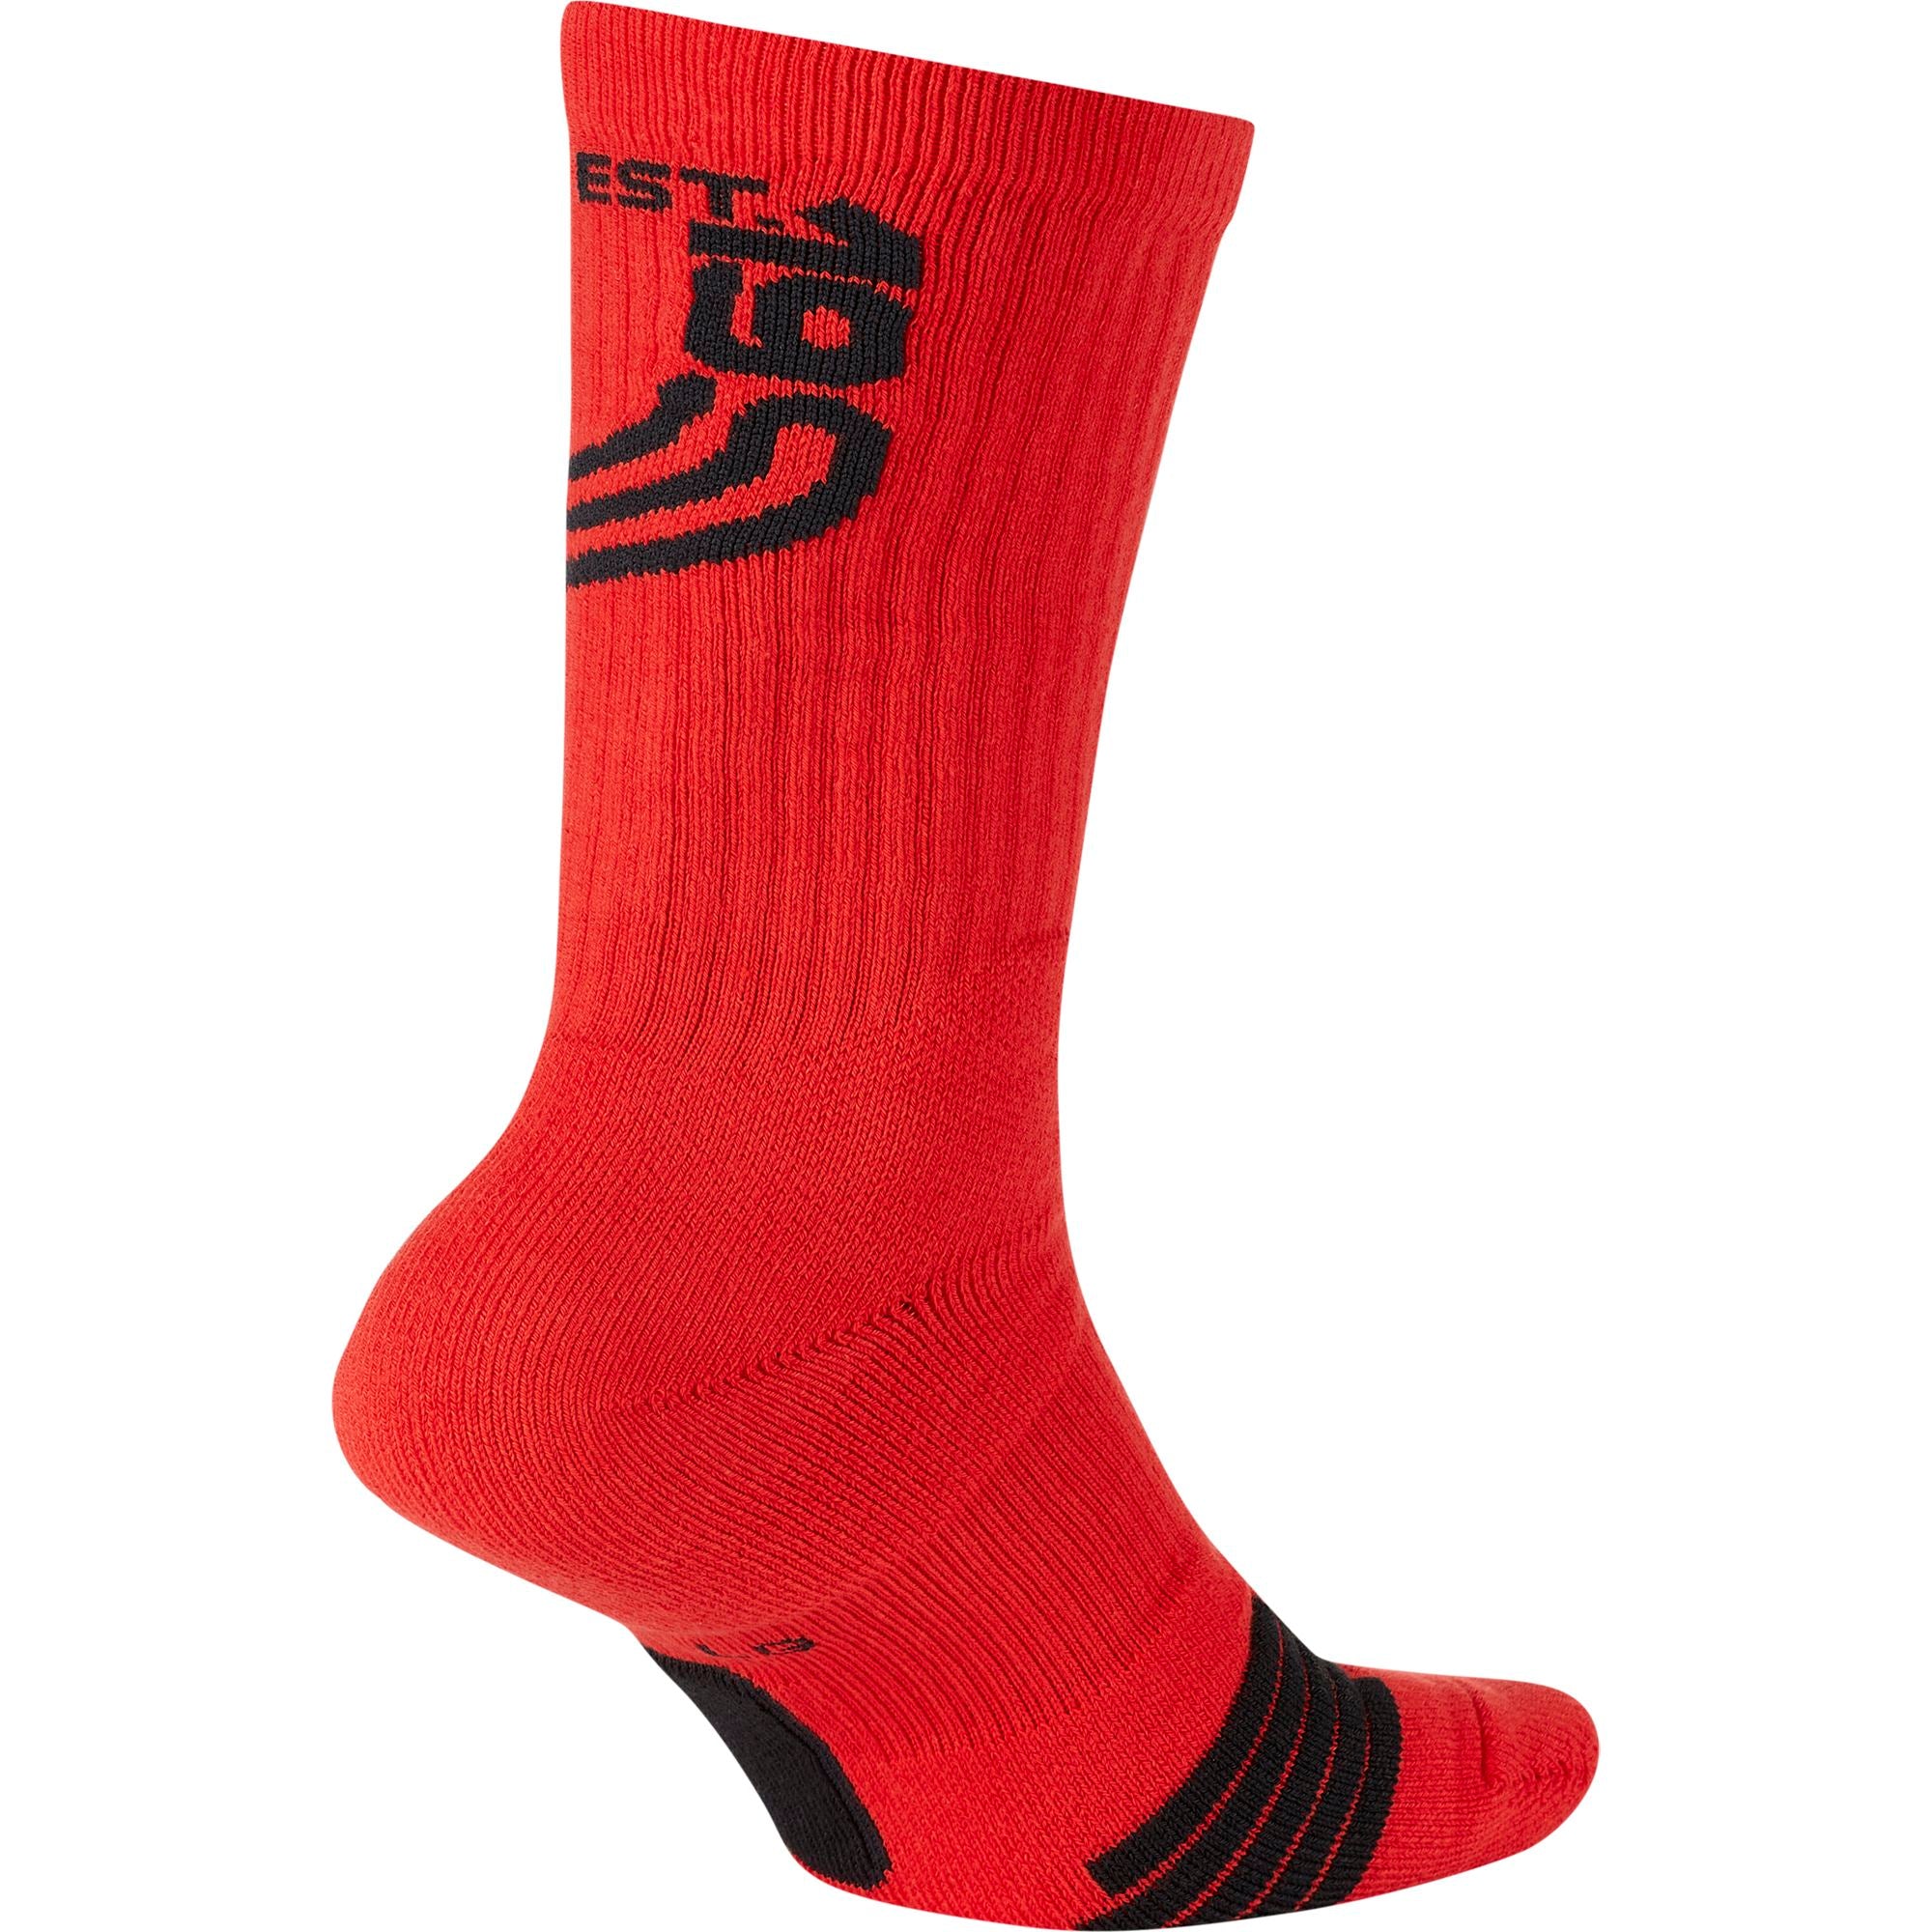 Nike Kyrie Elite Crew Basketball Socks - Habanero Red/Black